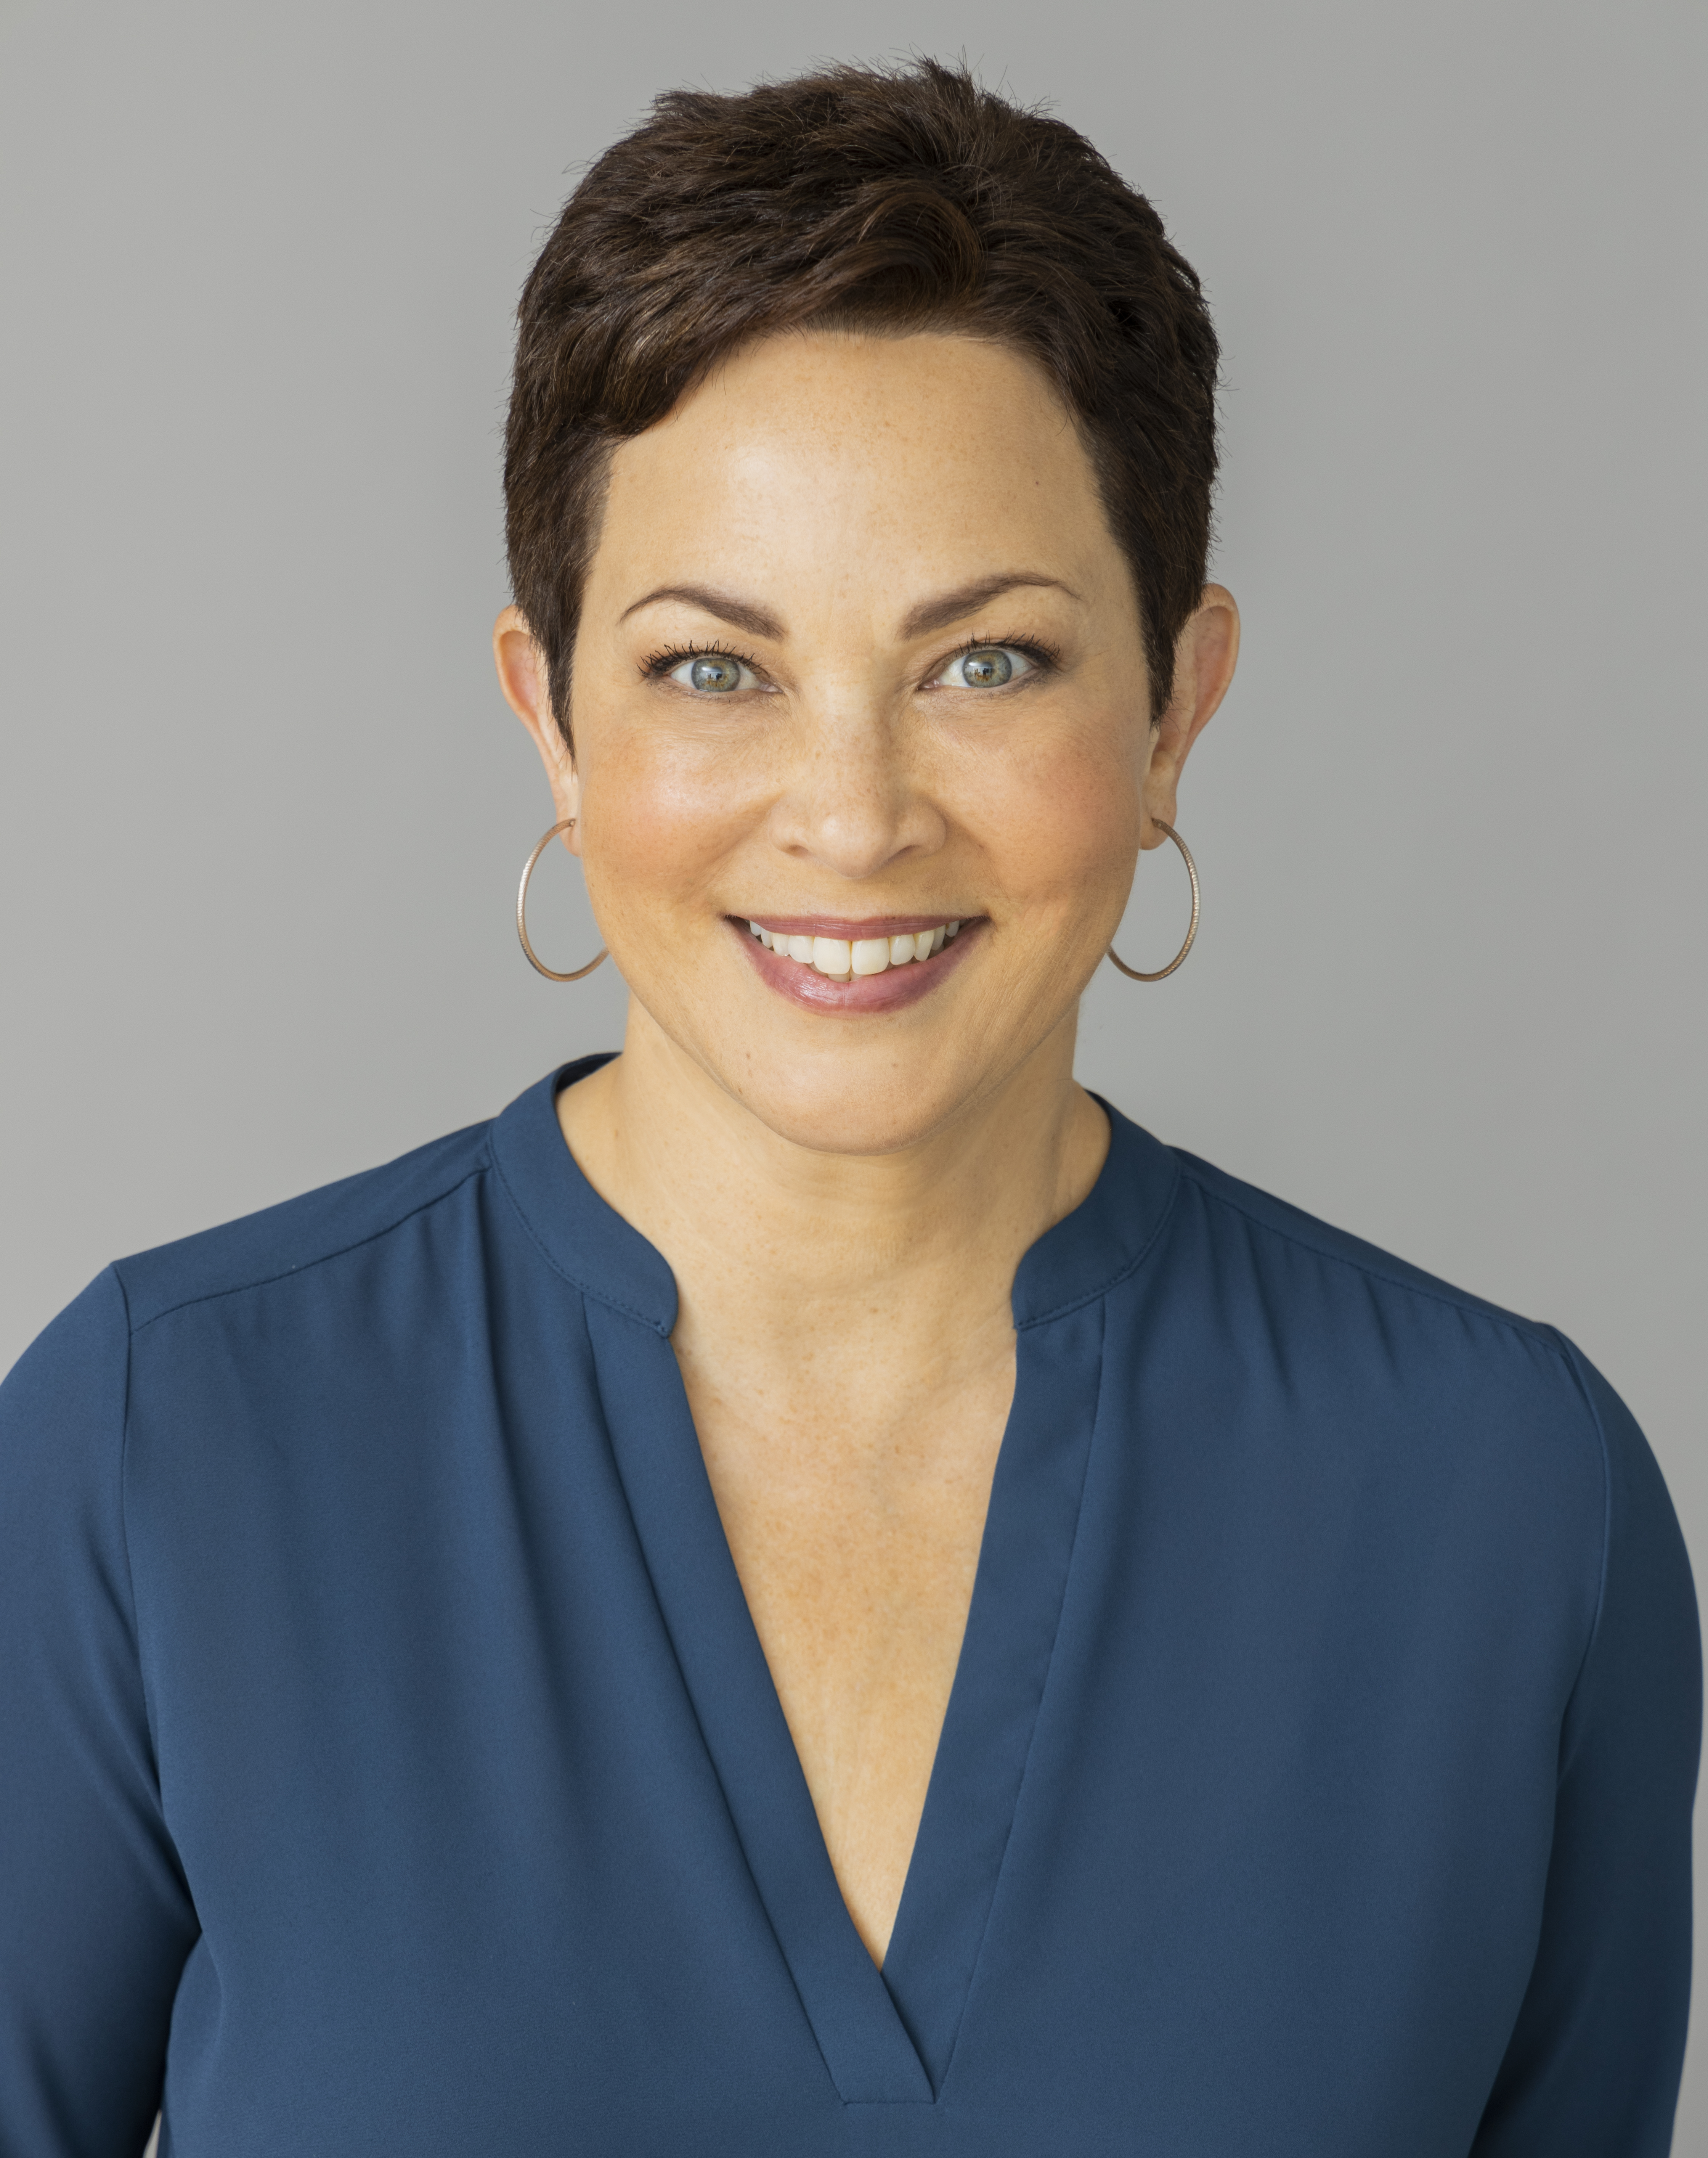 Image of presenter Ellie Krieger